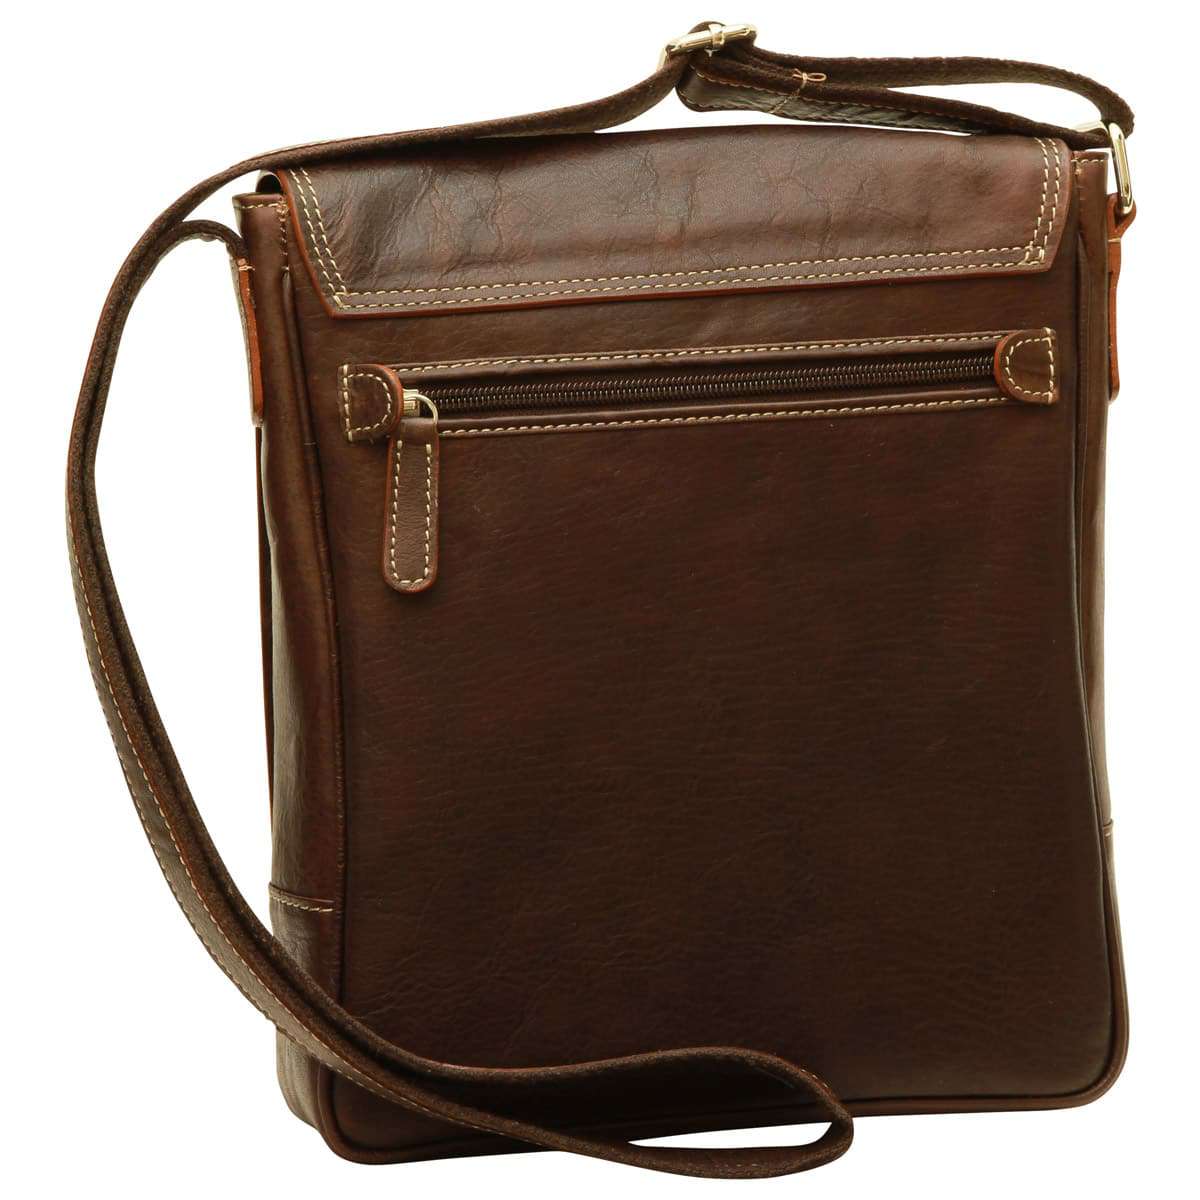 Leather I-Pad bag - Dark Brown | 087361TM | EURO | Old Angler Firenze